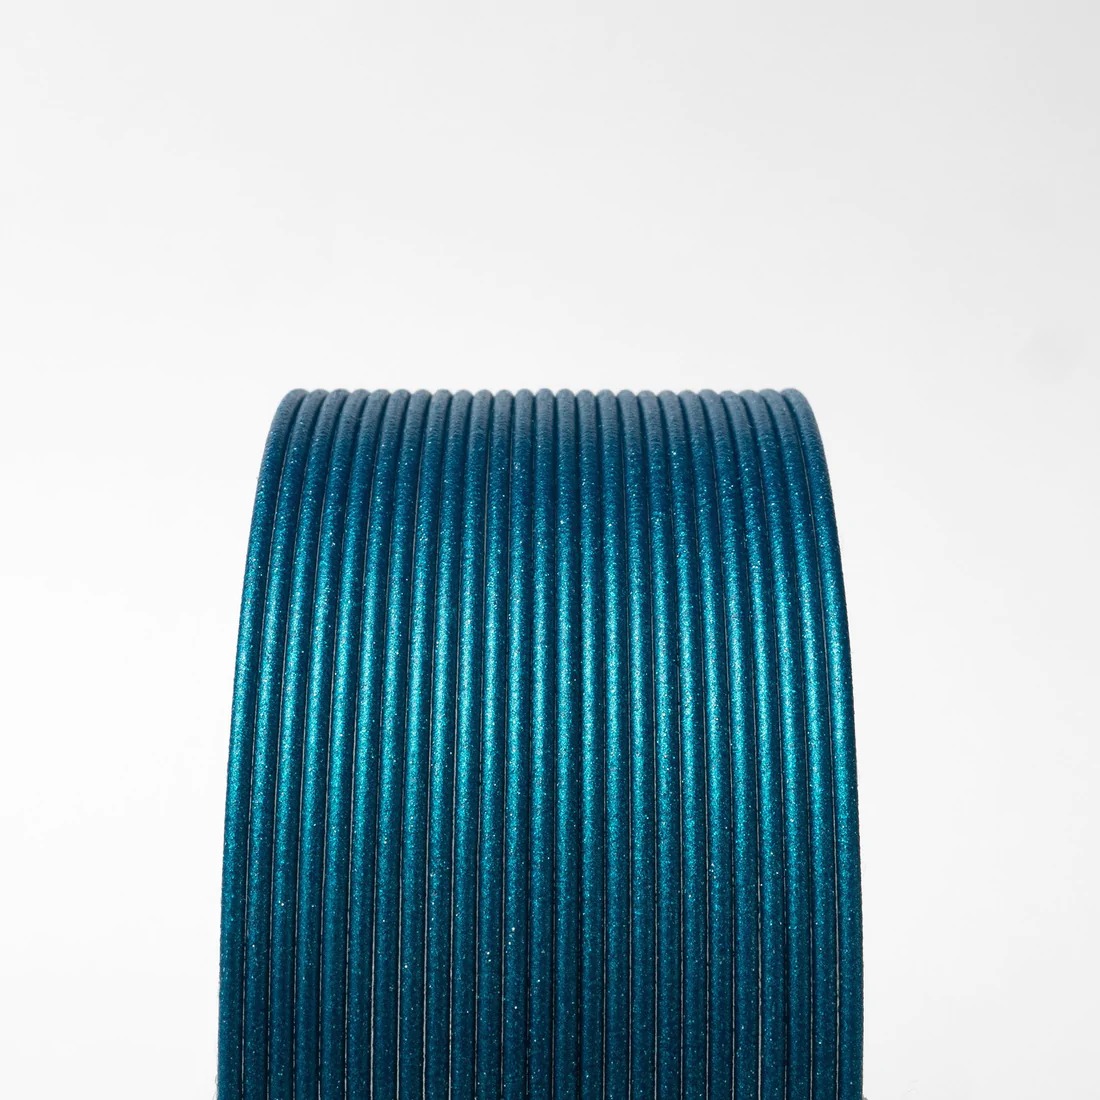 Mermaids Tale Metallic Teal HTPLA  Proto-pasta 1.75mm 500gms 3D printing filament